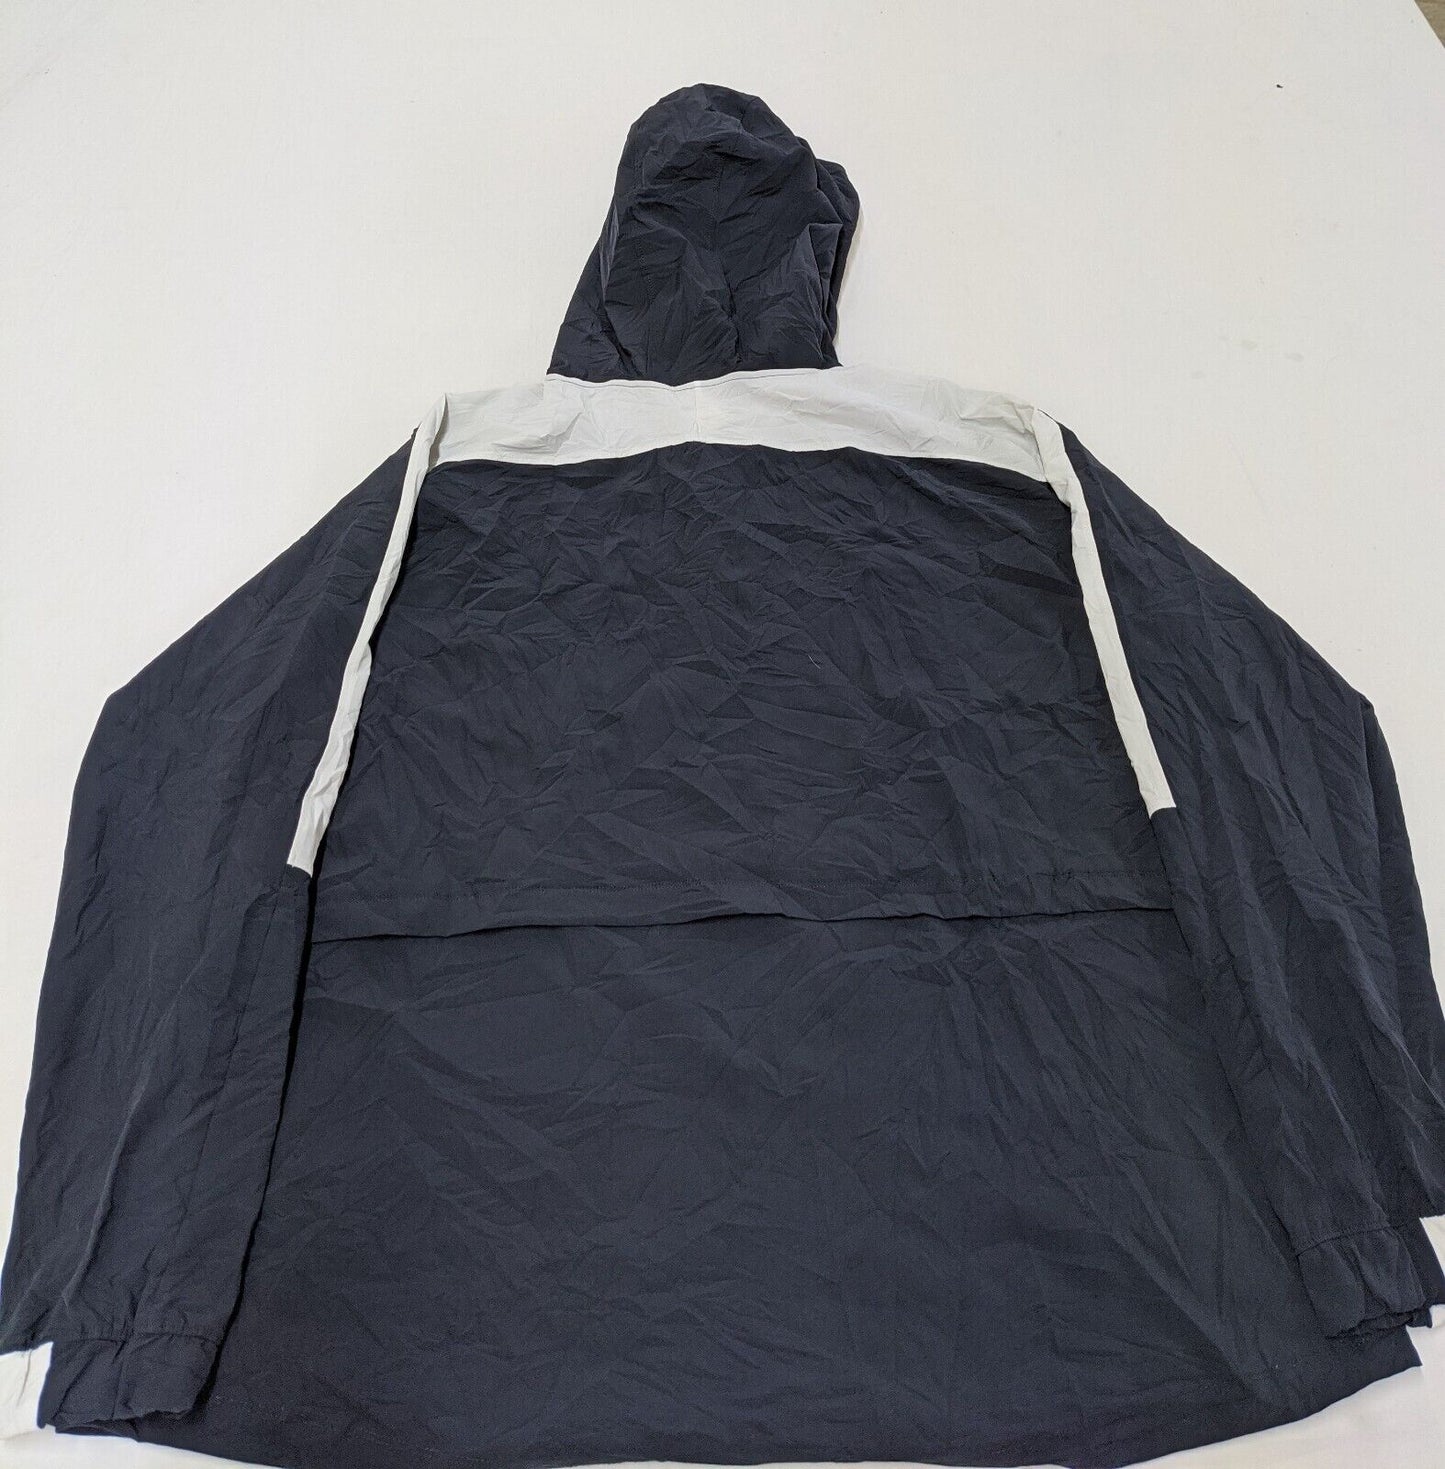 Under Armour Heat Gear Jacket Hoodie Mens Adult XL Round Shaped Neck White Black